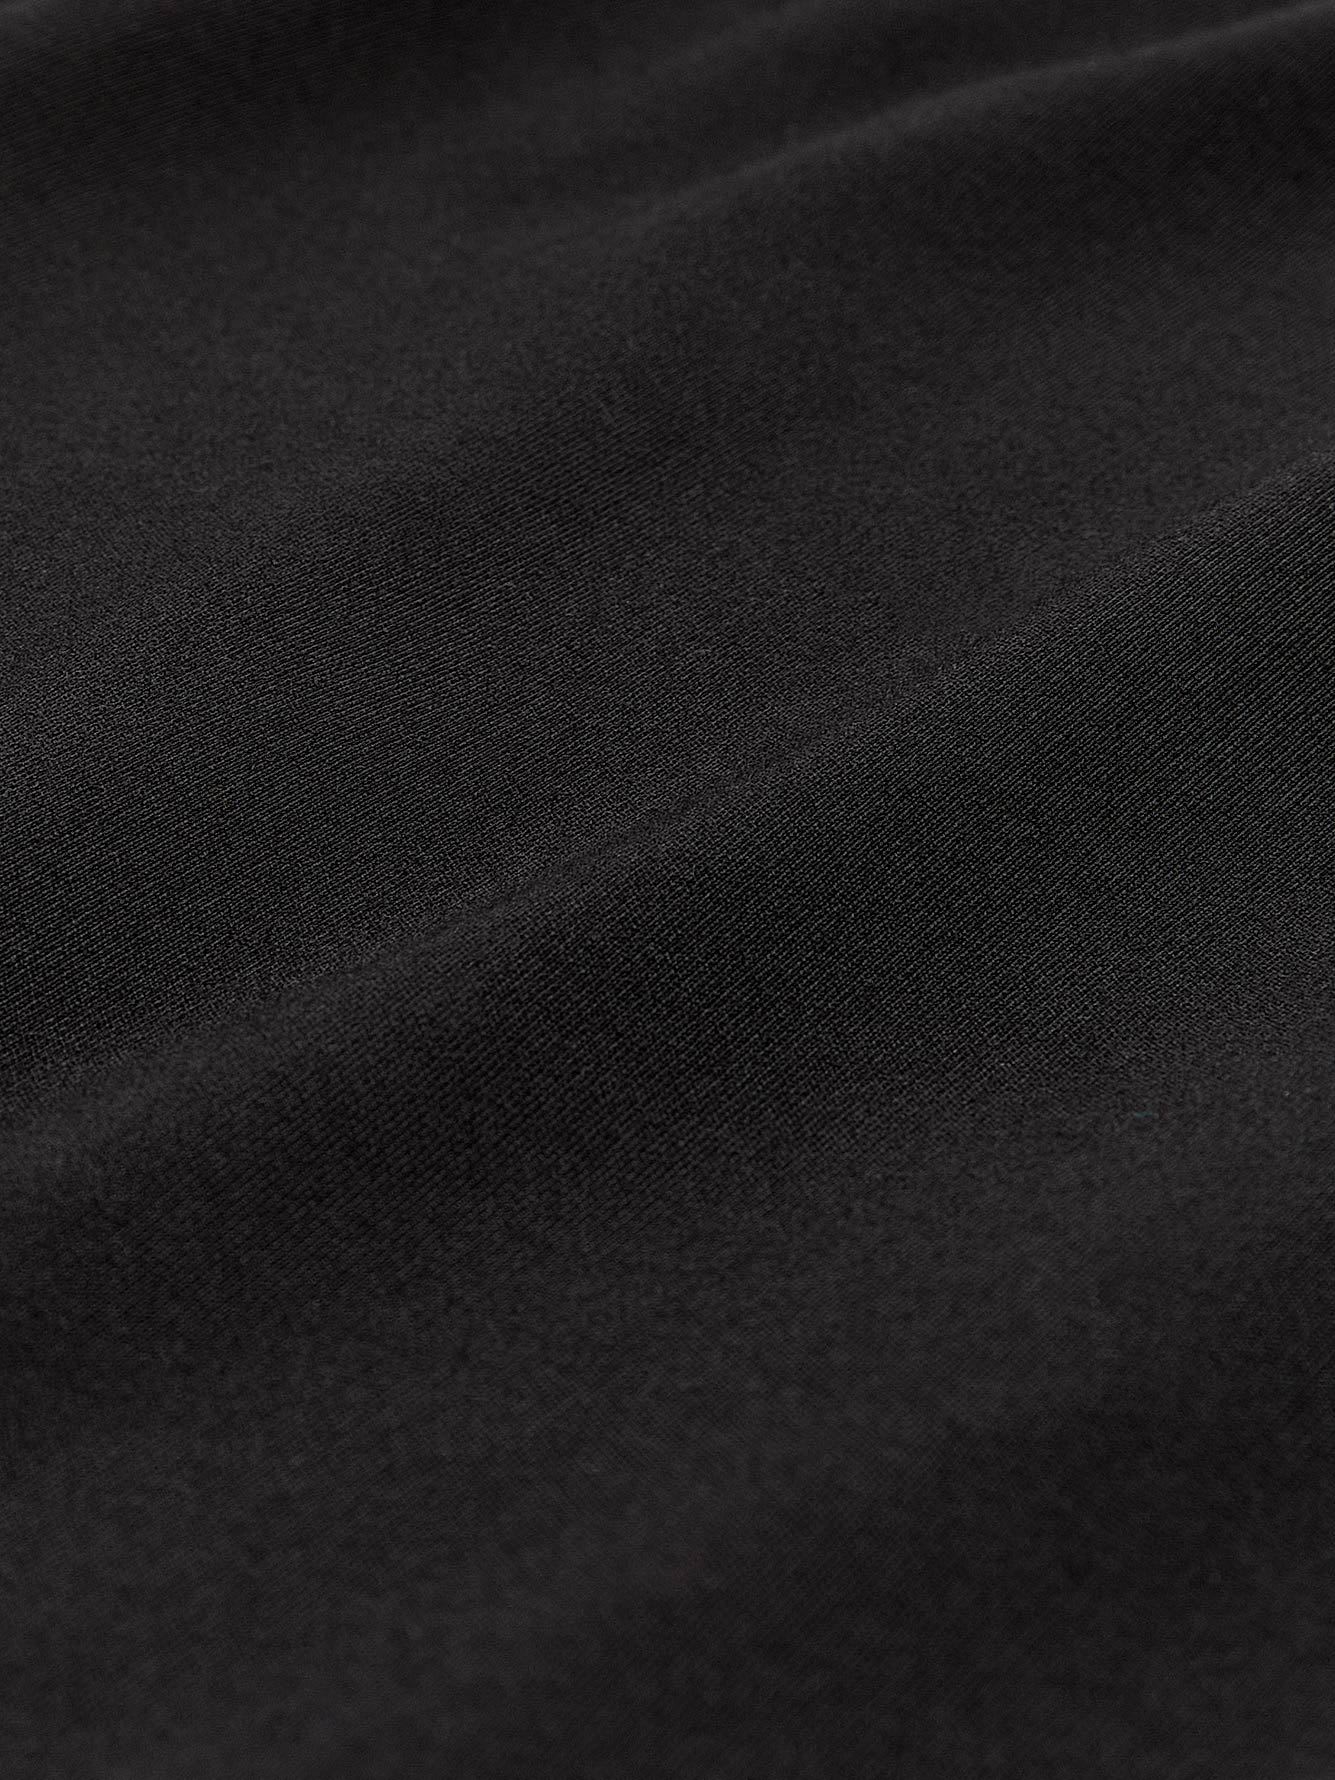 Black Mock-Neck Knit Midi Dress - Addition Elle